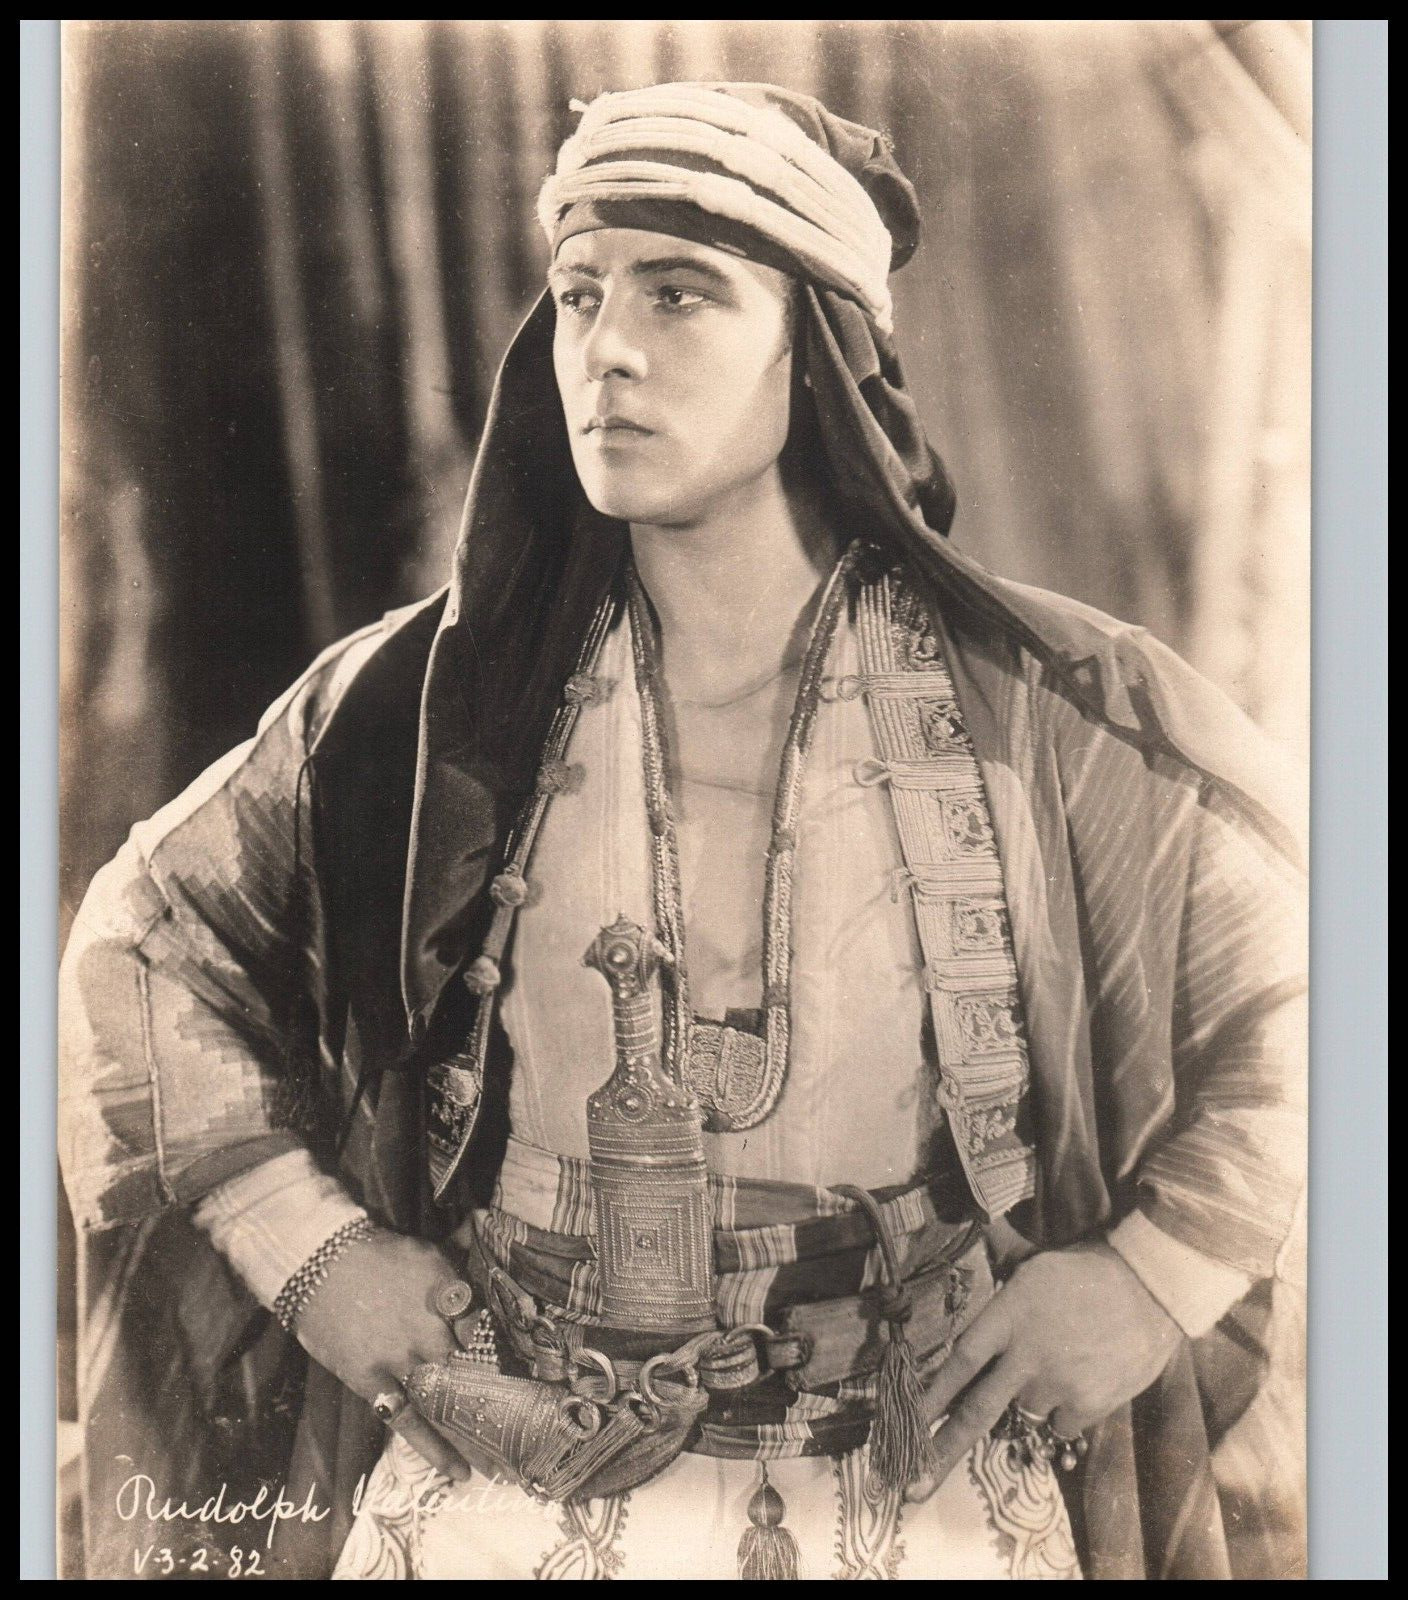 Hollywood HANDSOME ACTOR RUDOLPH VALENTINO 1920s VINTAGE PORTRAIT Photo 744